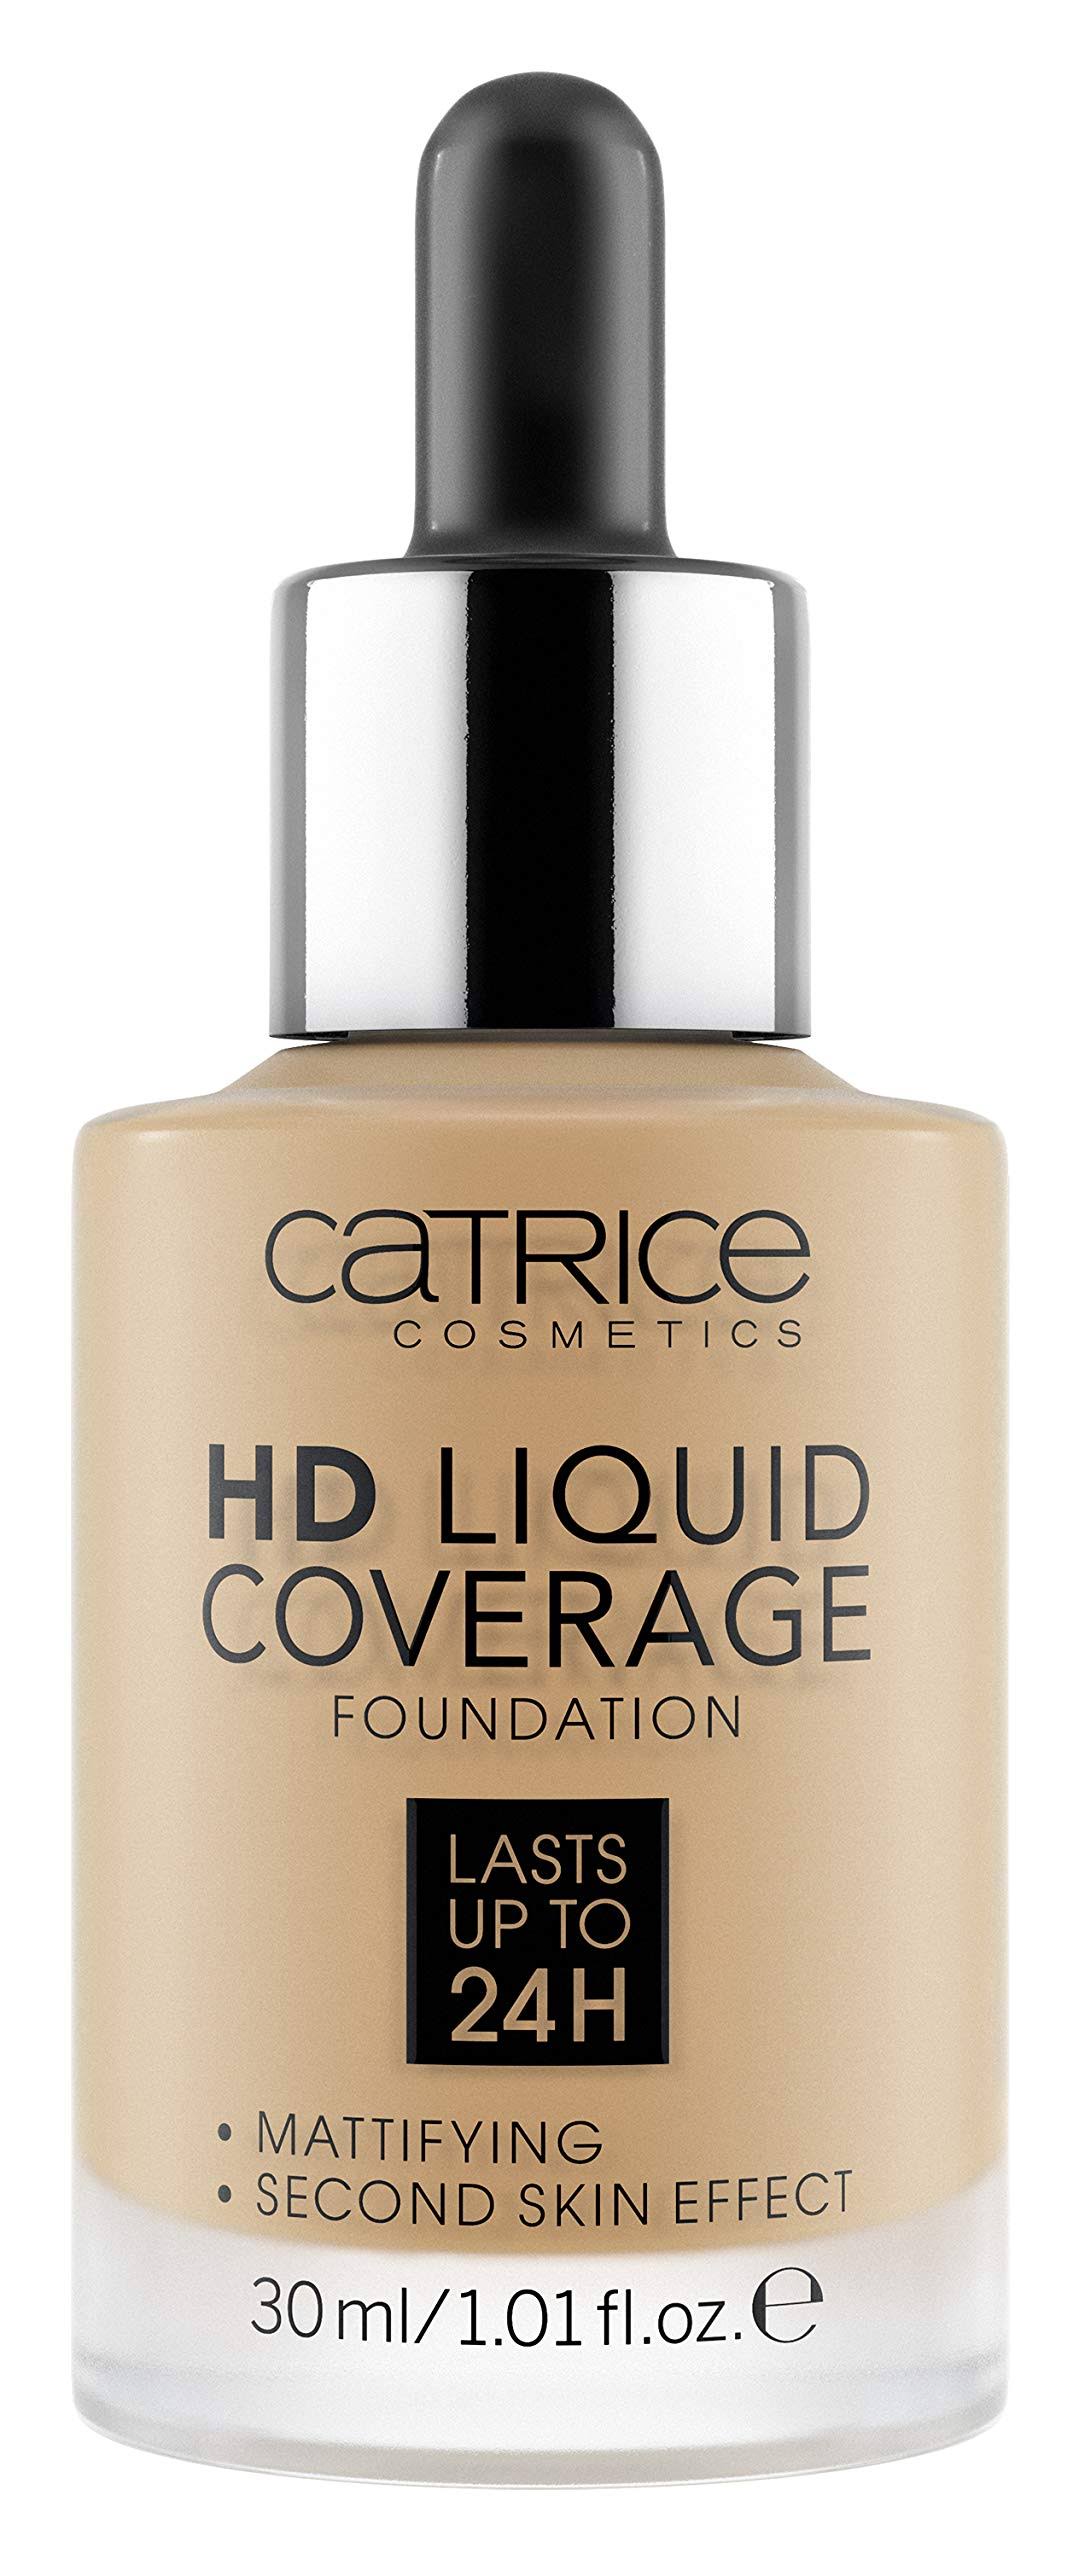 Catrice HD Liquid Coverage Foundation 046 Camel Beige 30ml (1.01fl oz)